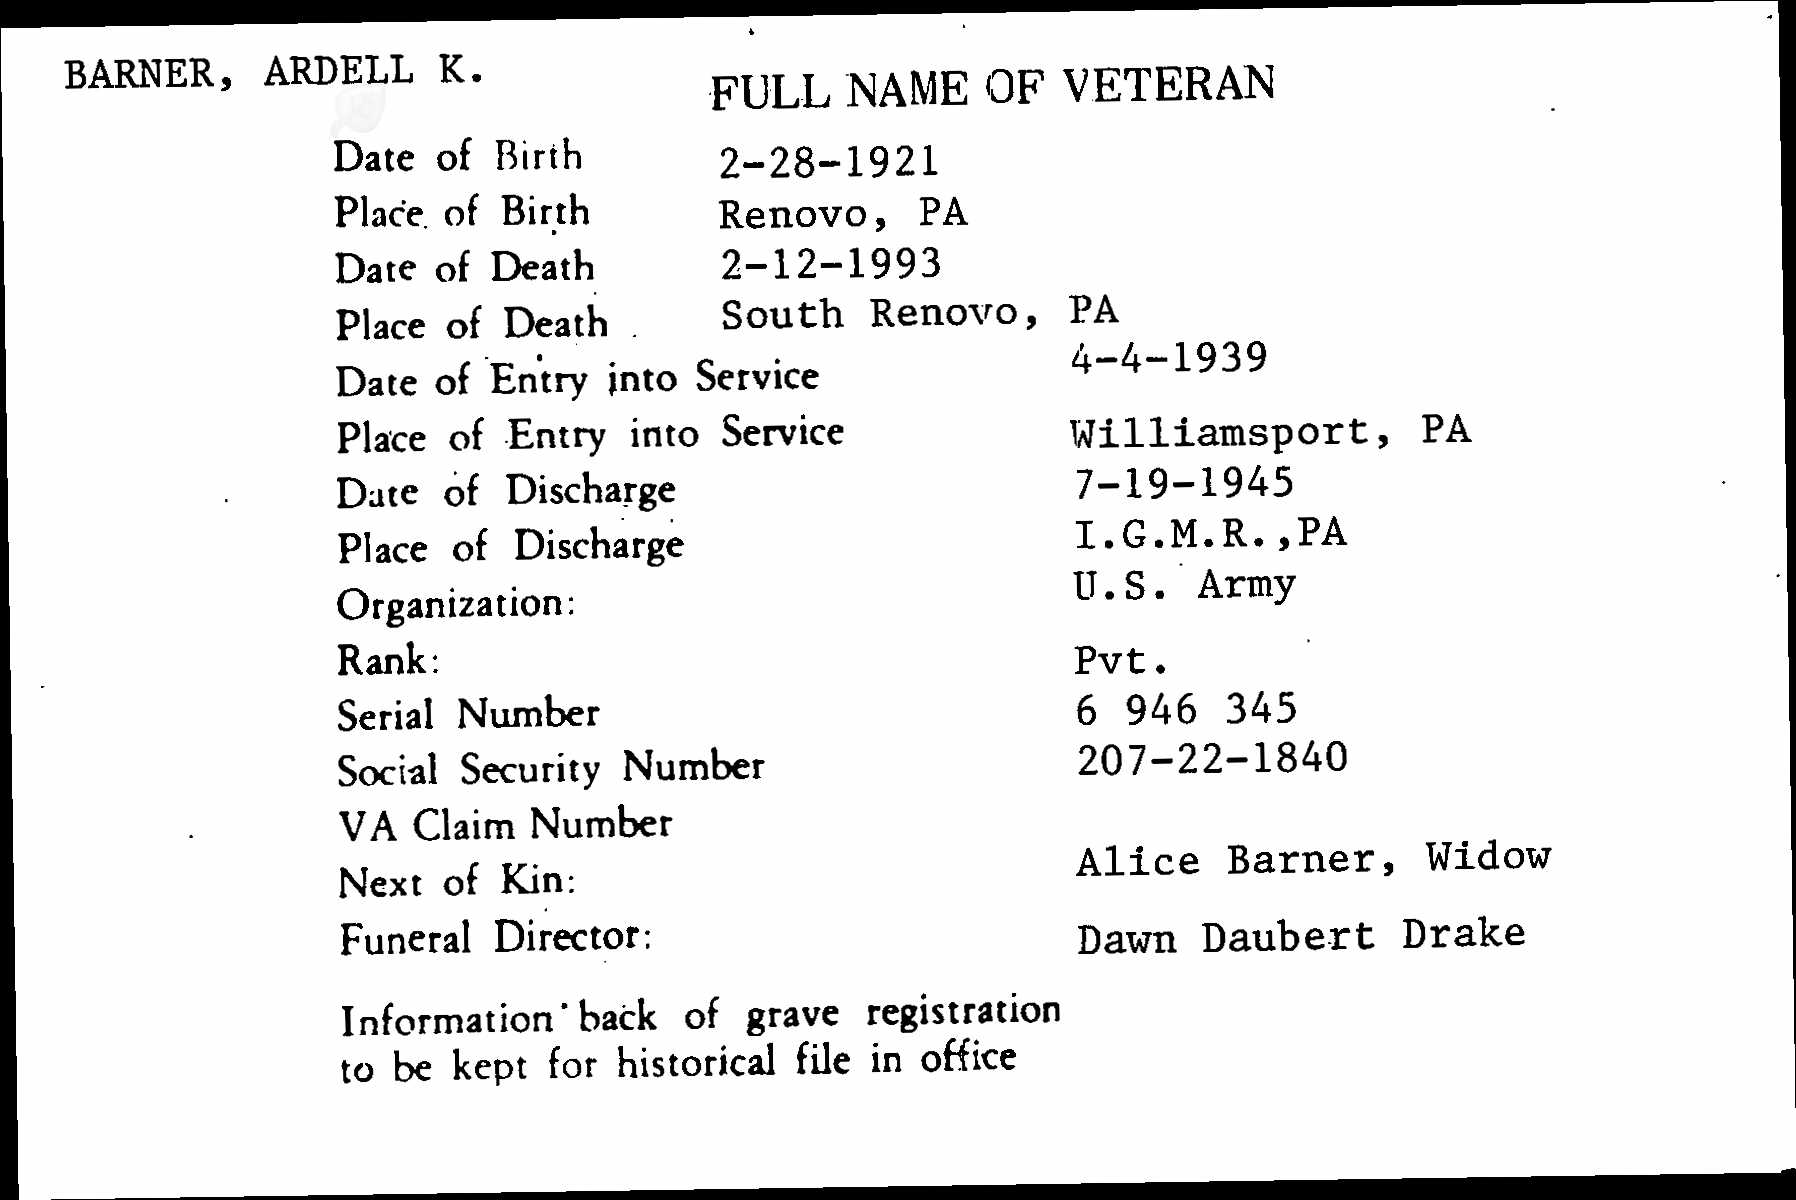 Ardell K. Barner burial card